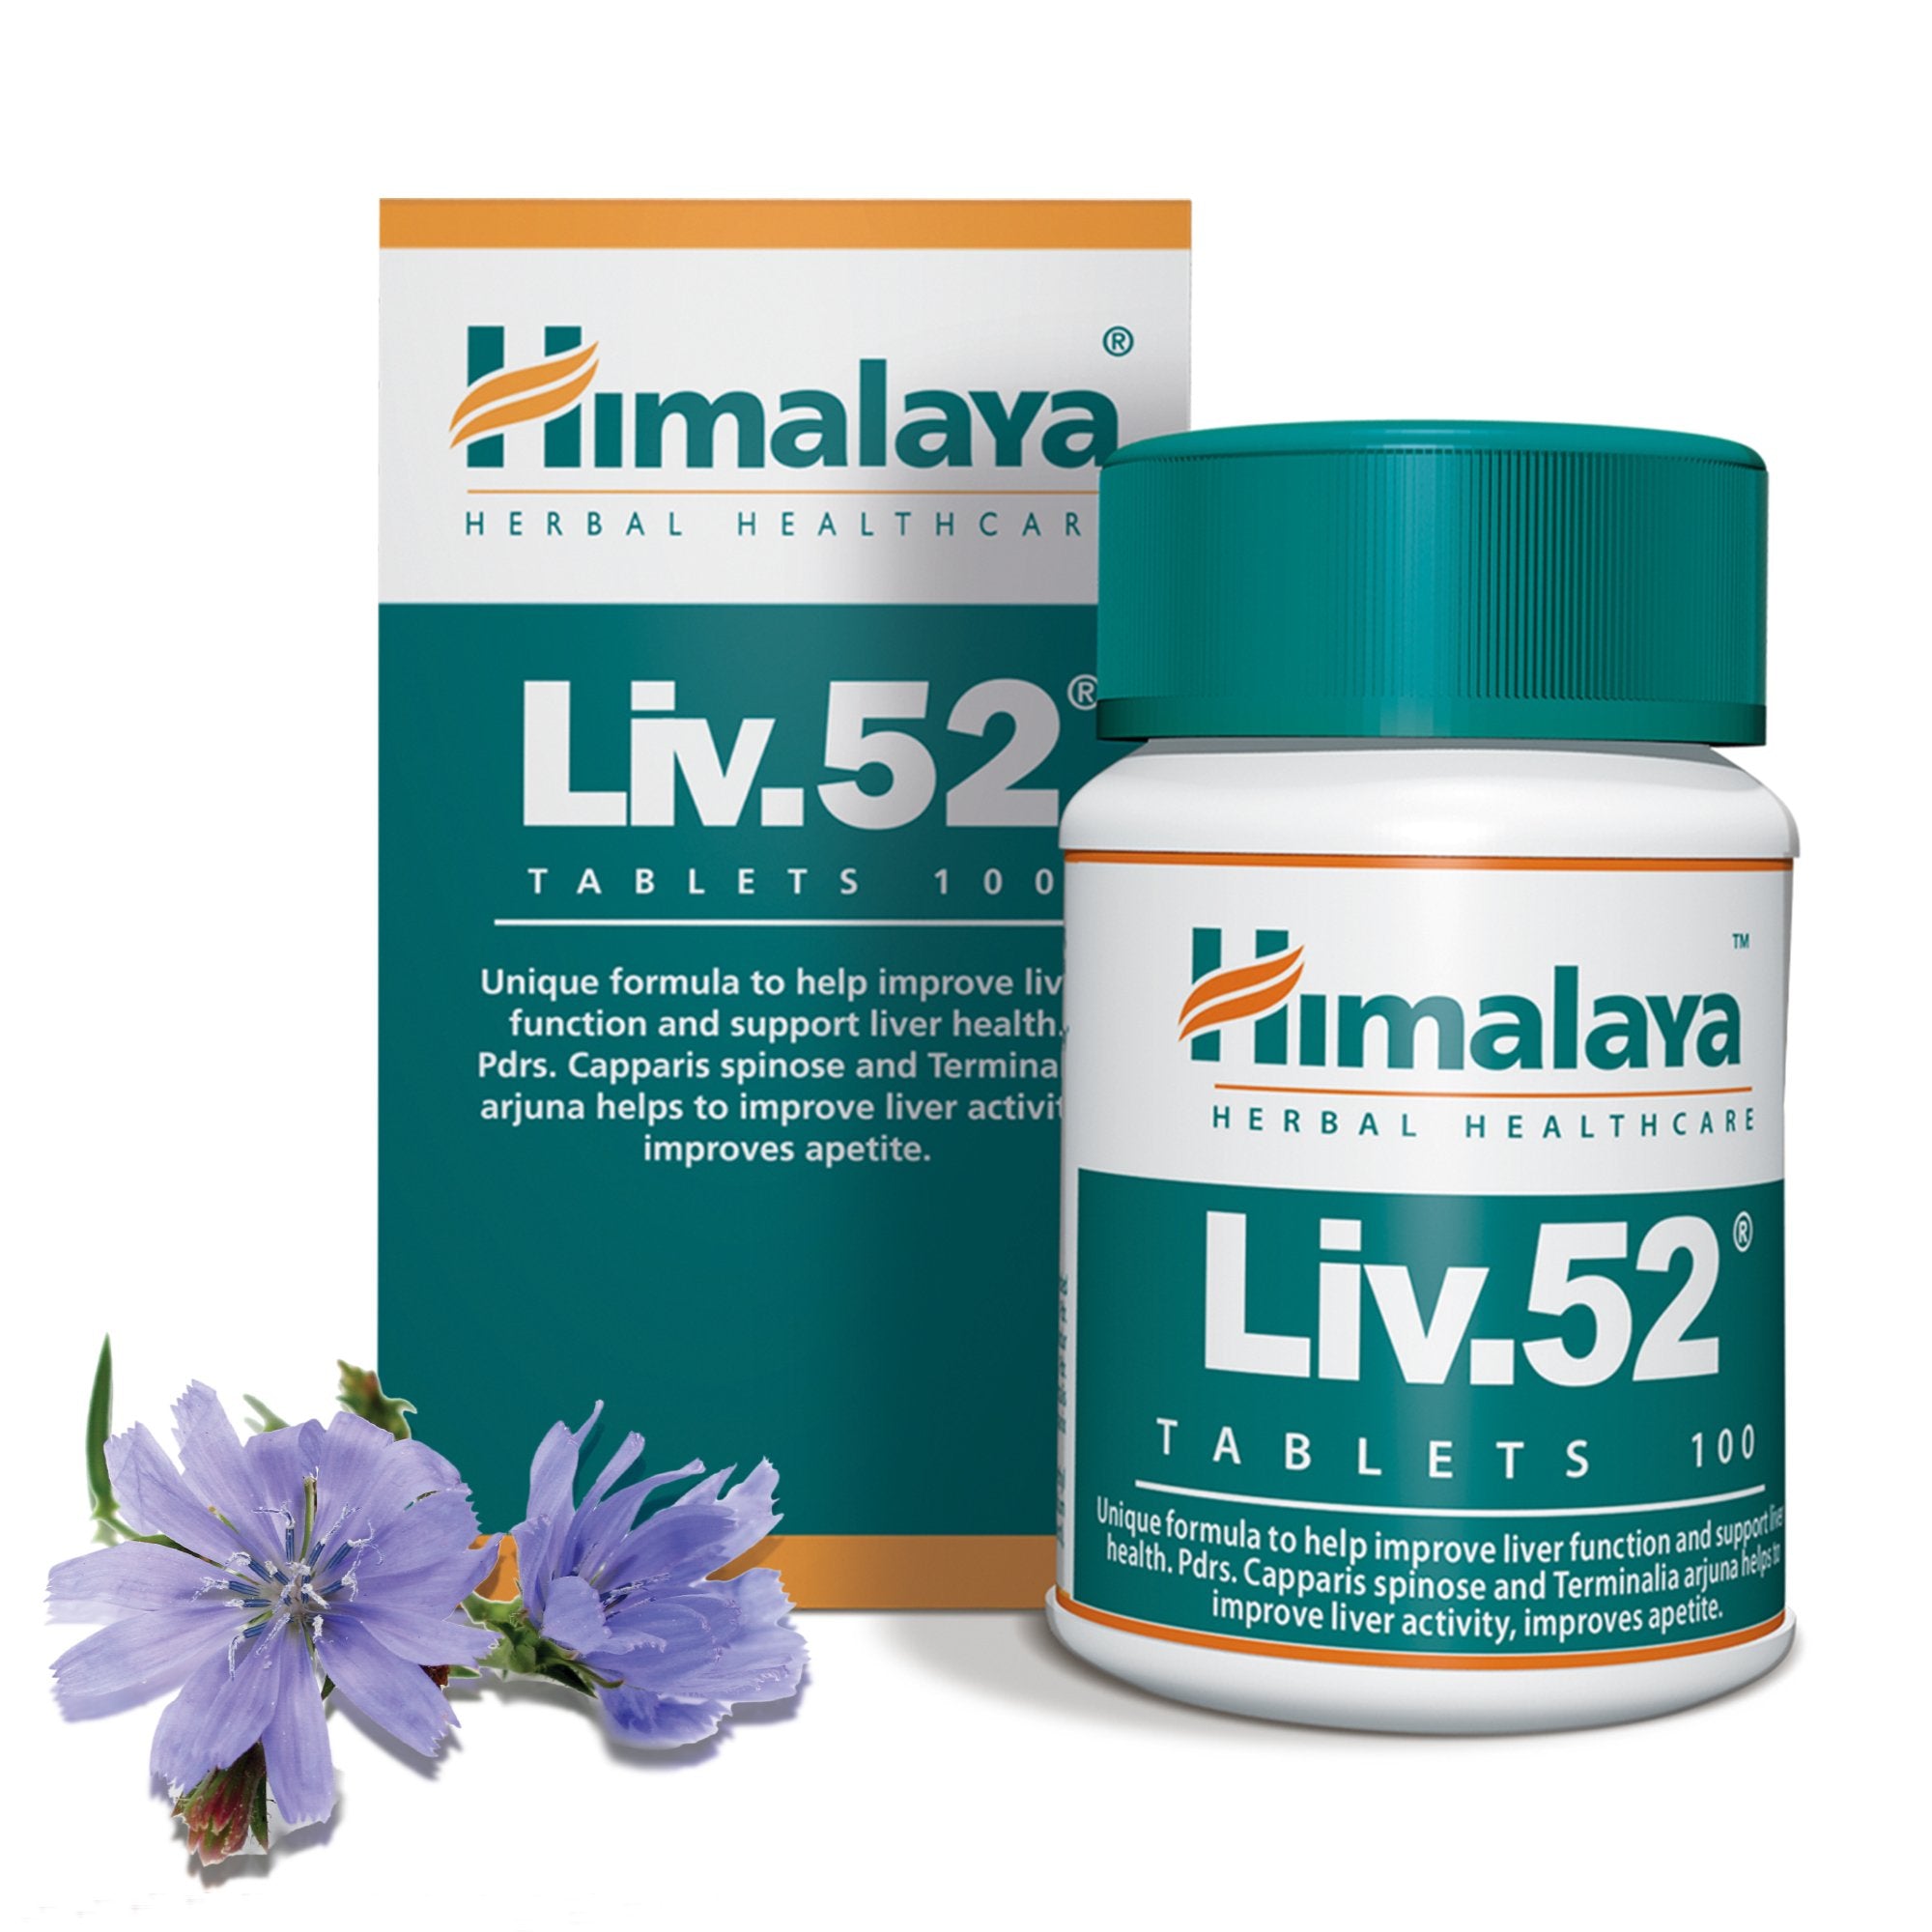 Himalaya Liv.52 - 100 Tablets - Uses, Reviews, Ingredients